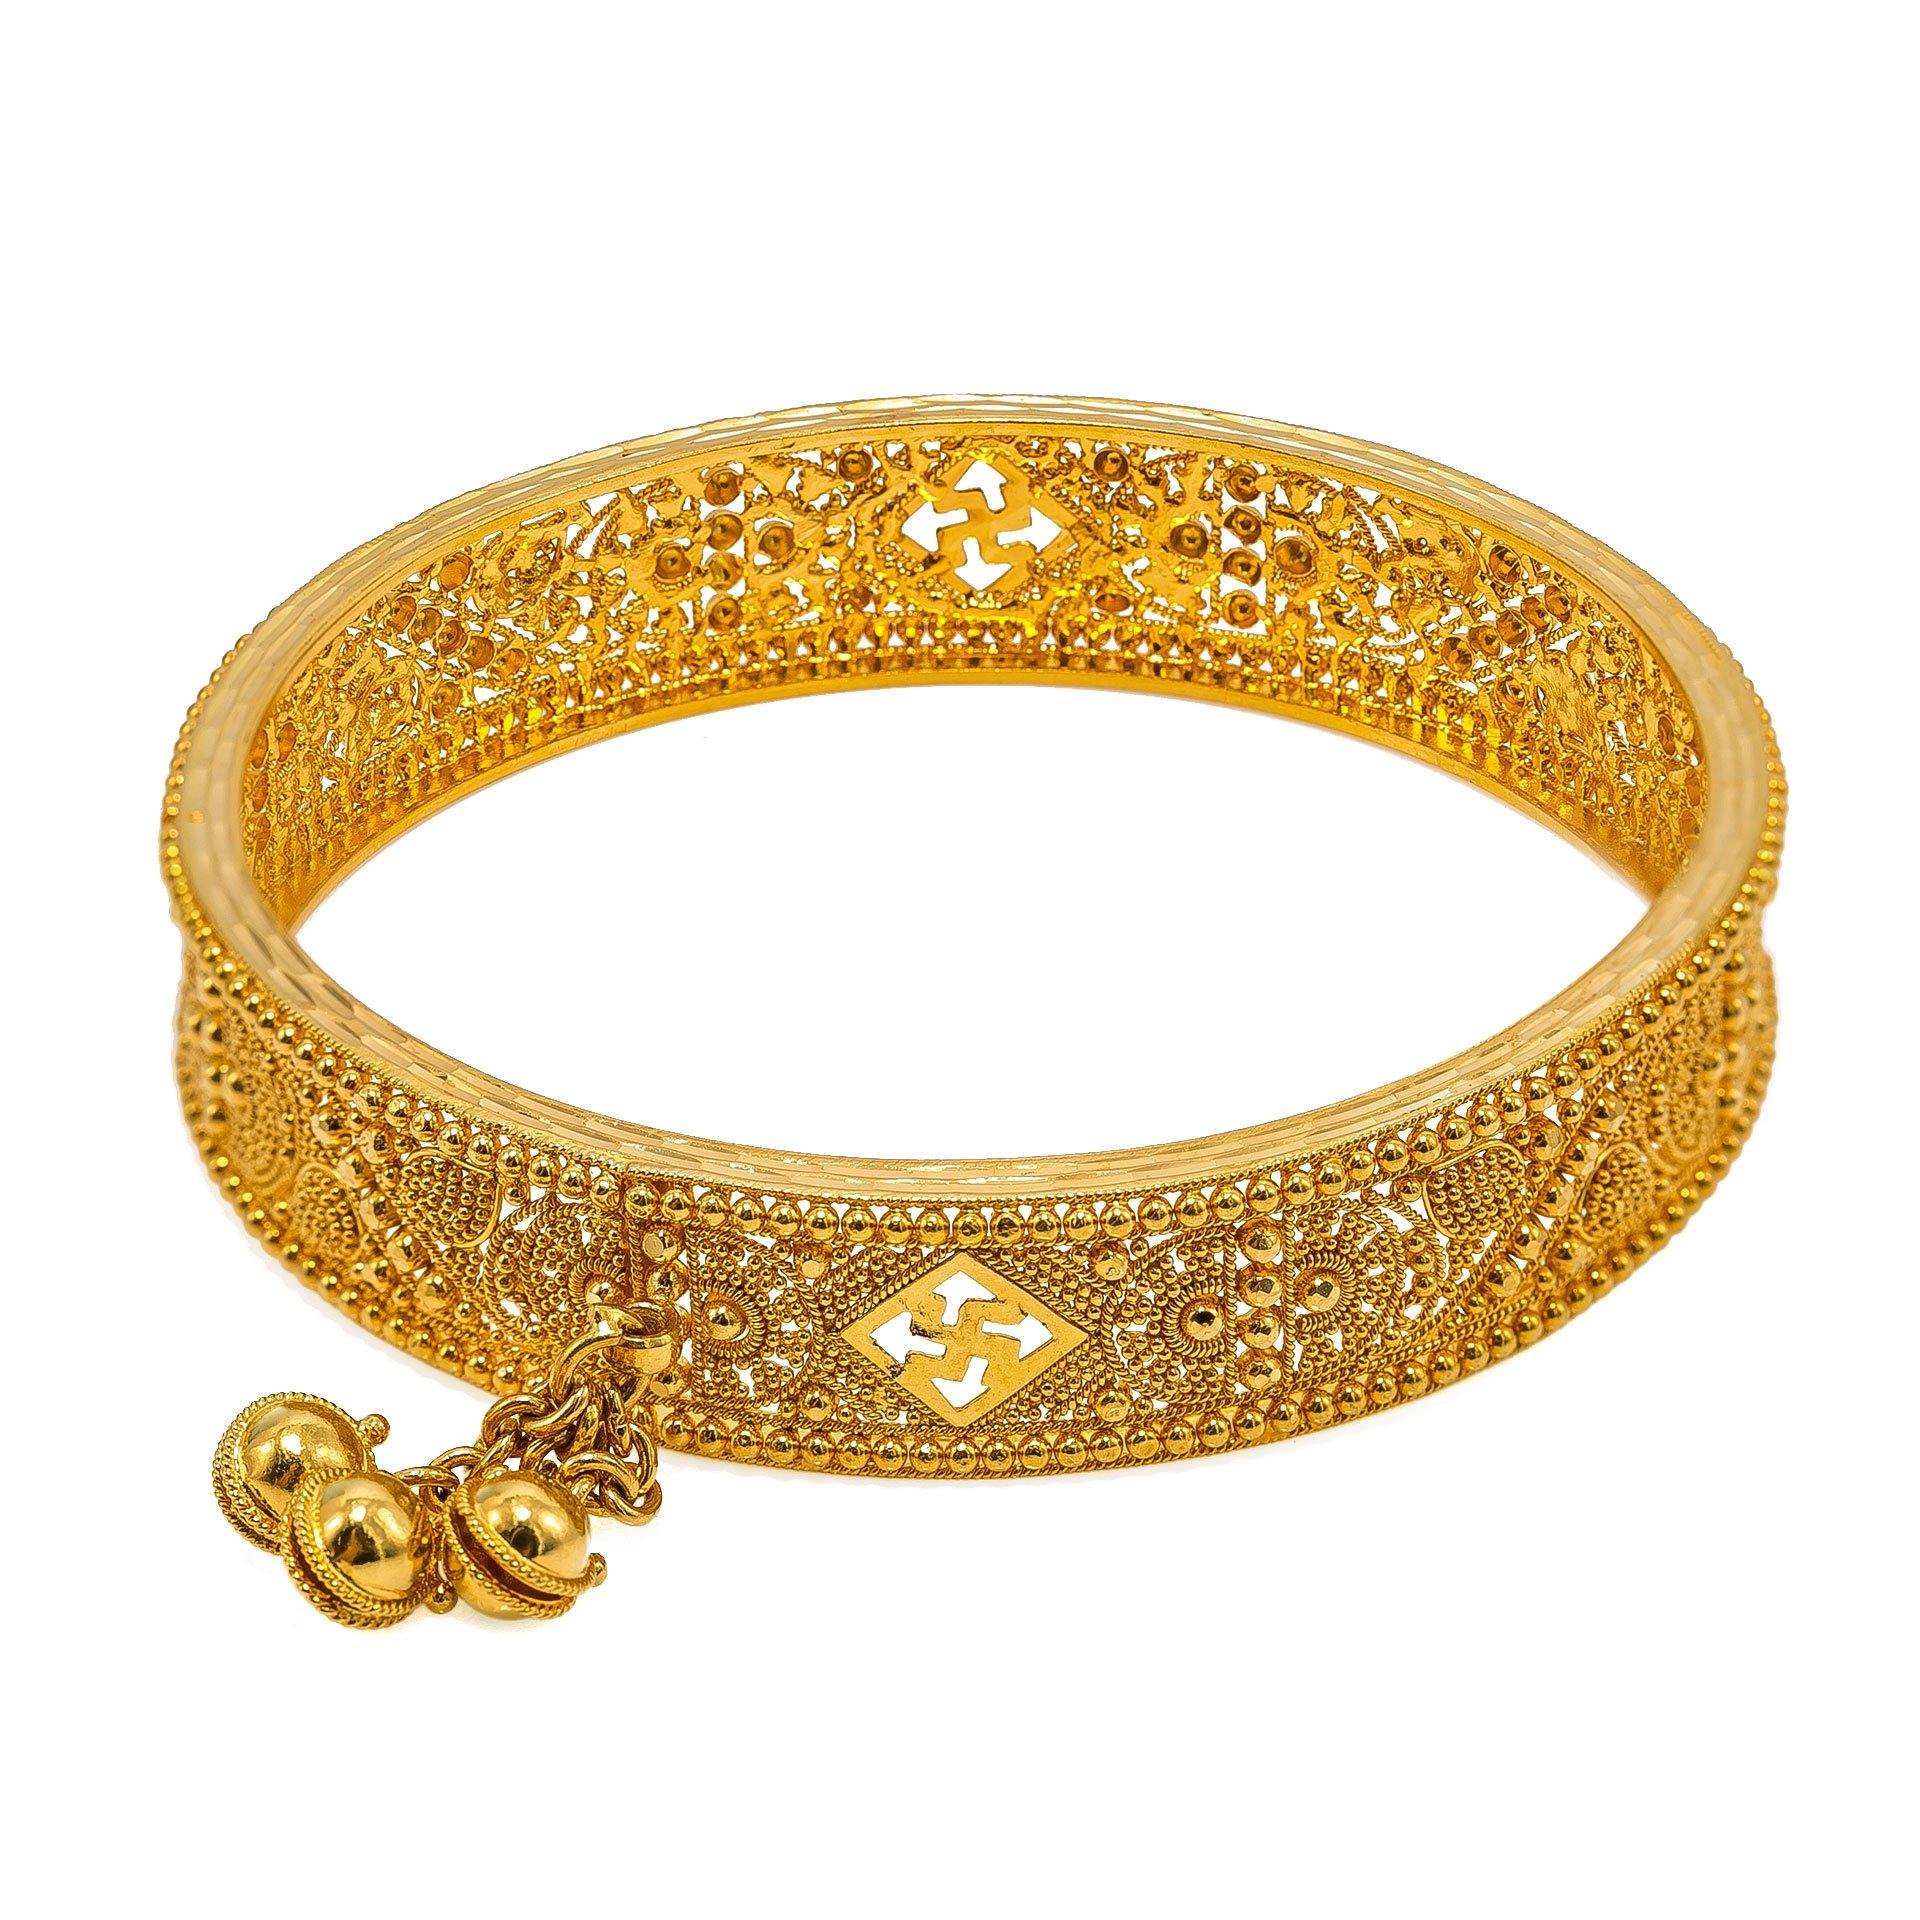 Buy Royal Heart Flower Design Gold Bracelet Online - Branta – Brantashop